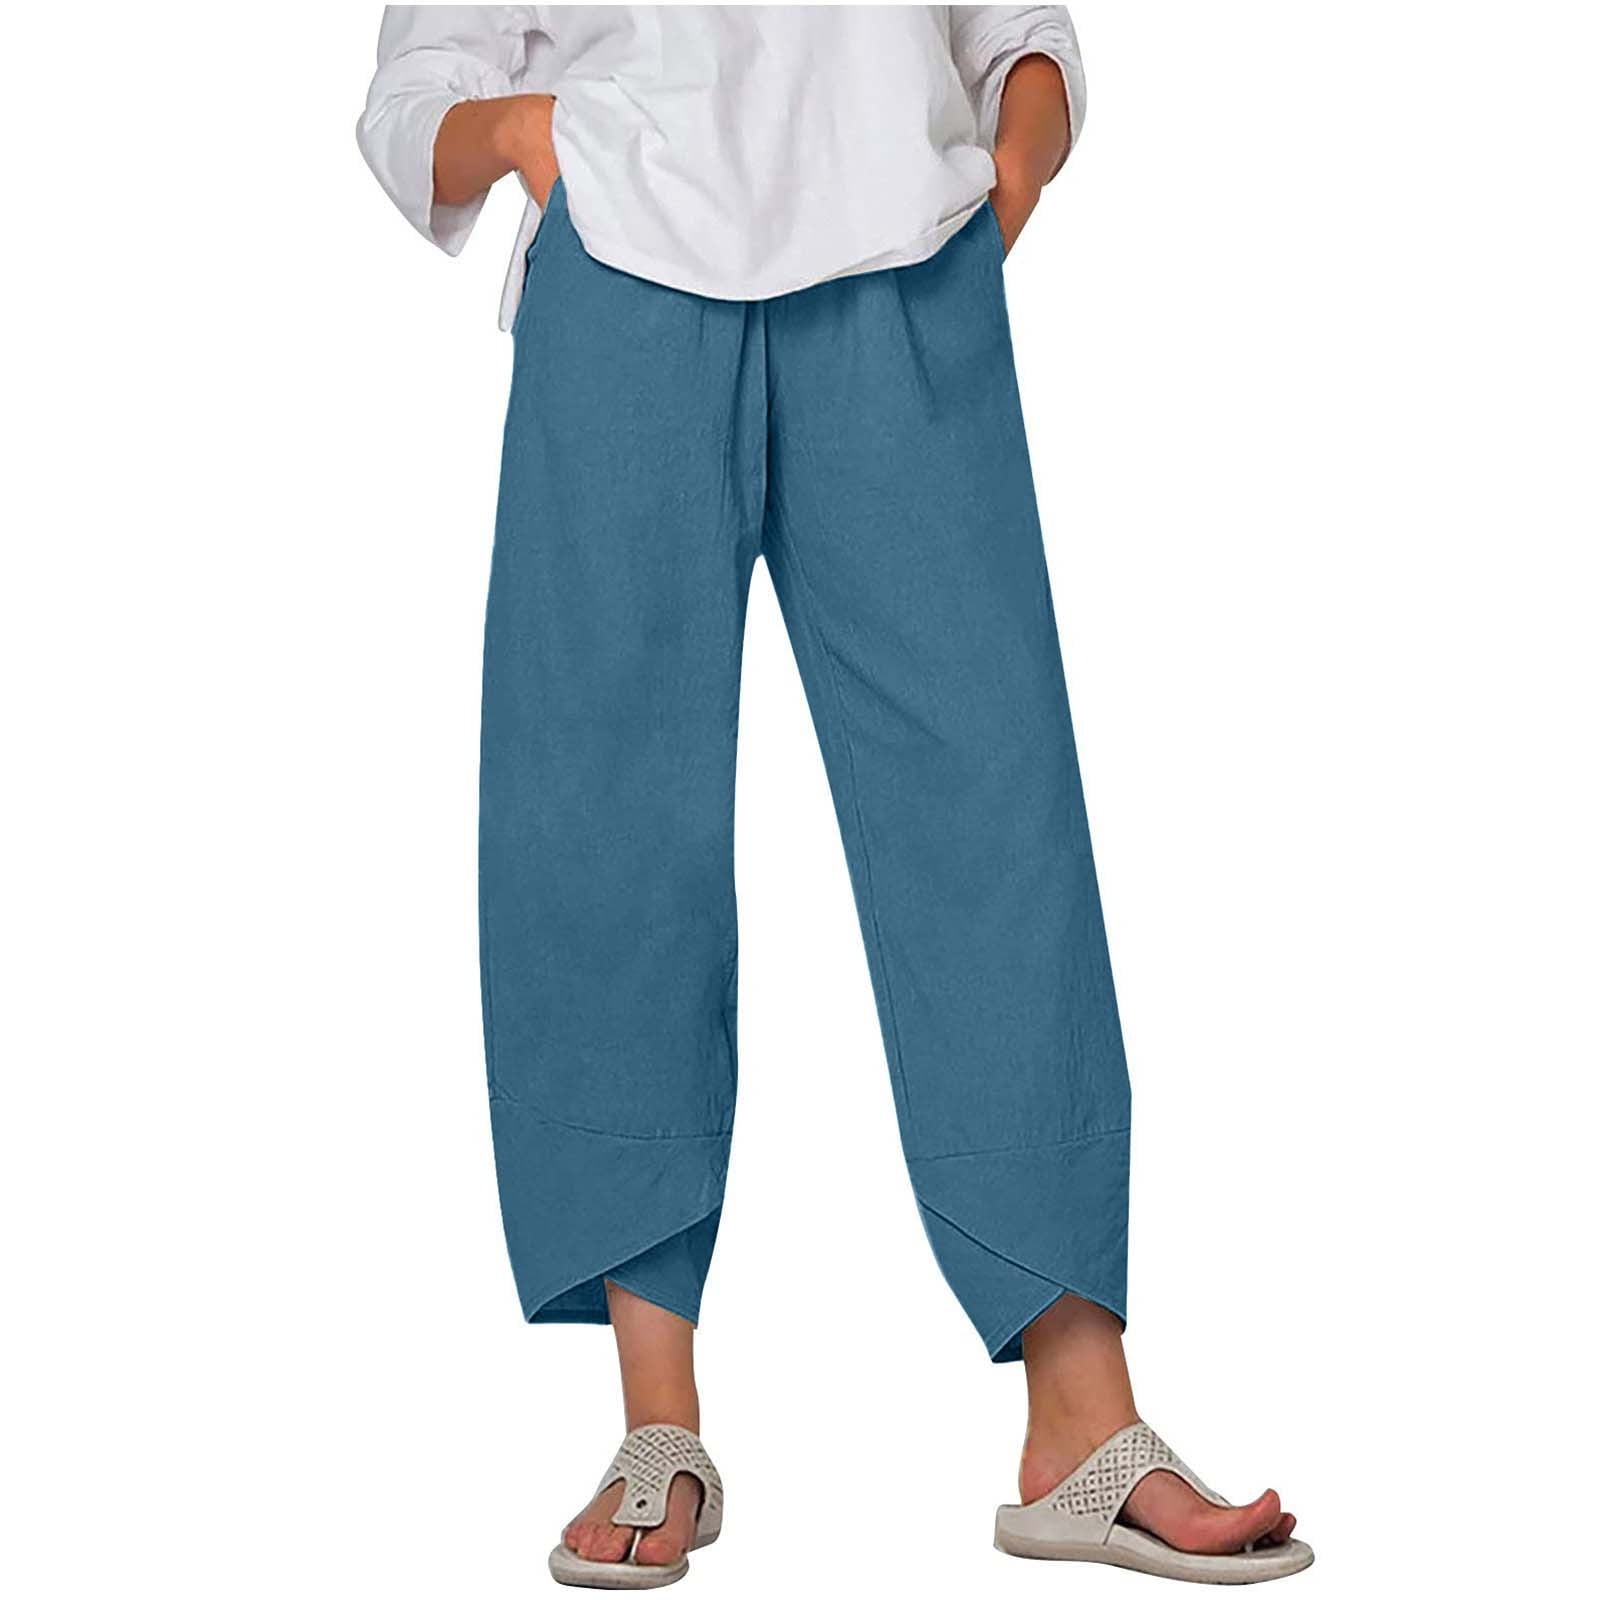 VEKDONE Women's Plus Size Cotton Linen Pants Elastic High Waisted ...